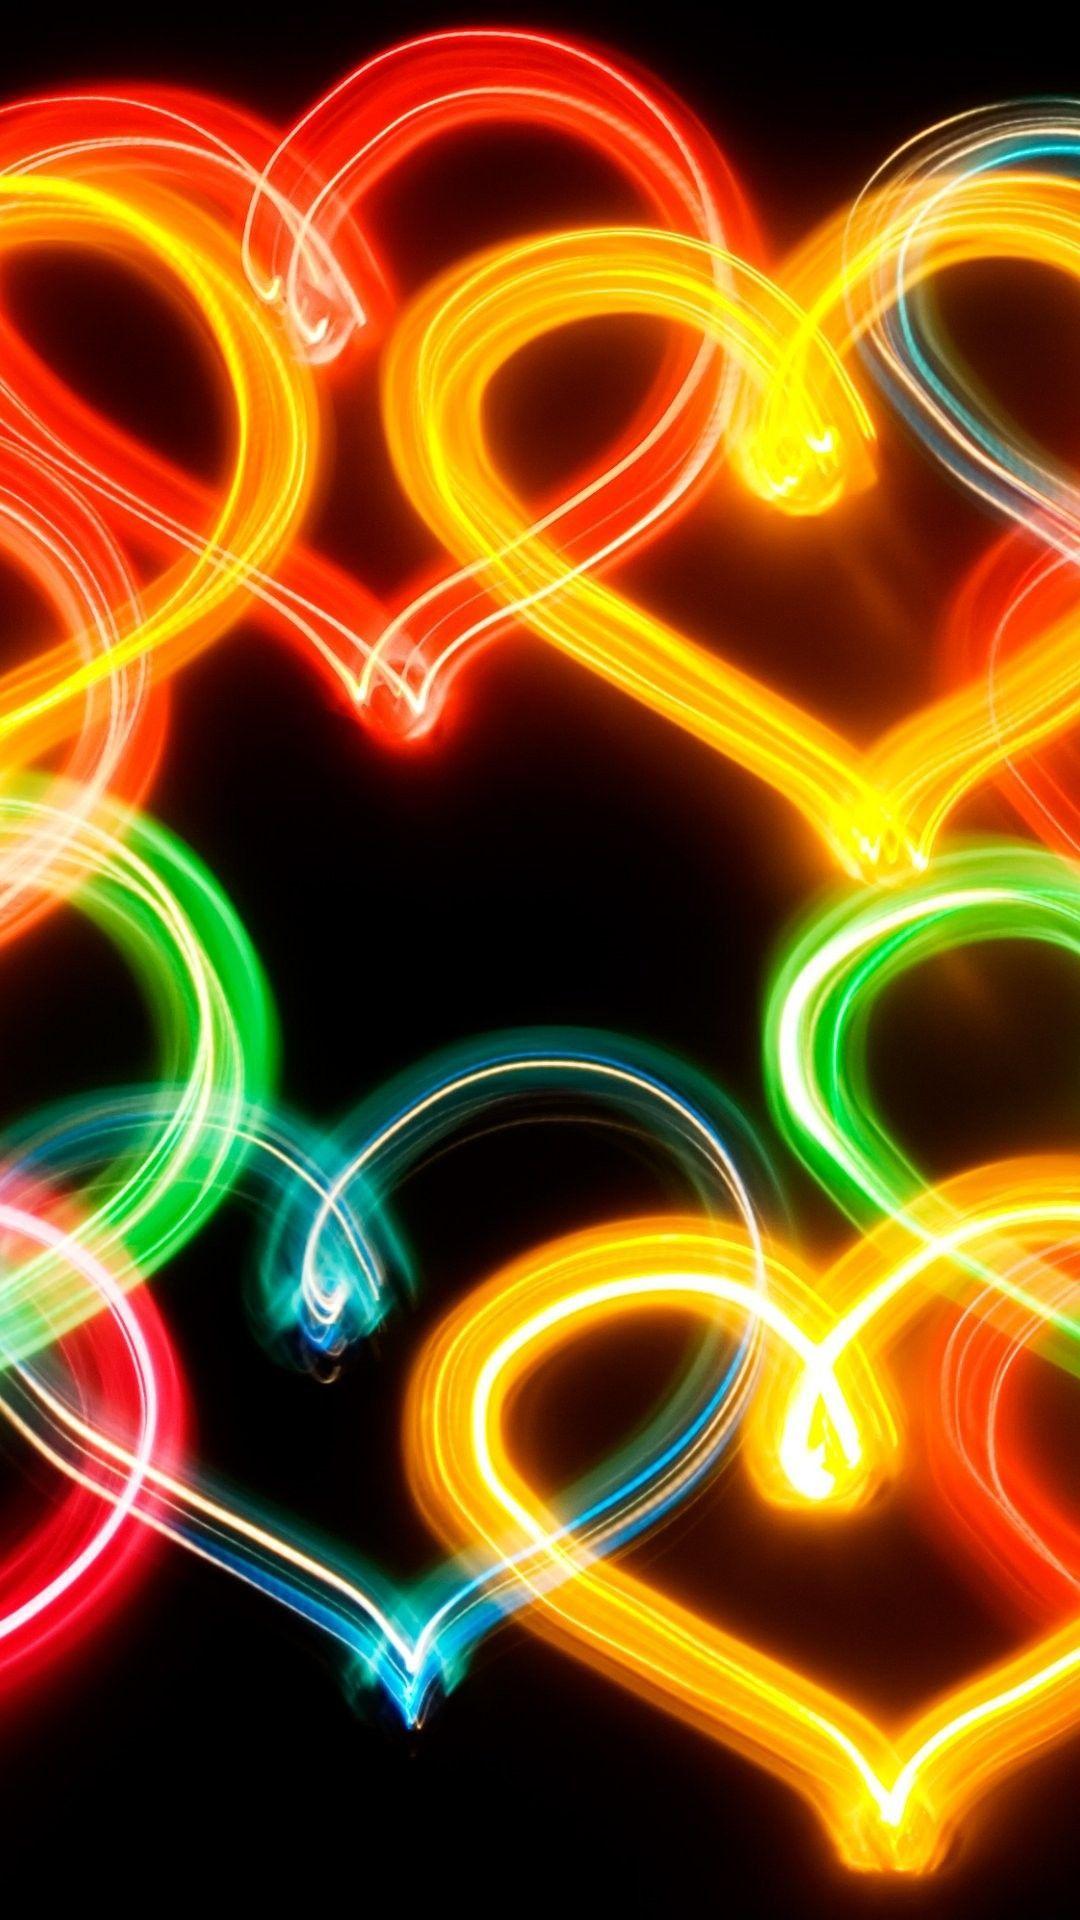 Neon Heart iPhone 6 Plus Wallpaper 13319 iPhone 6 Plus